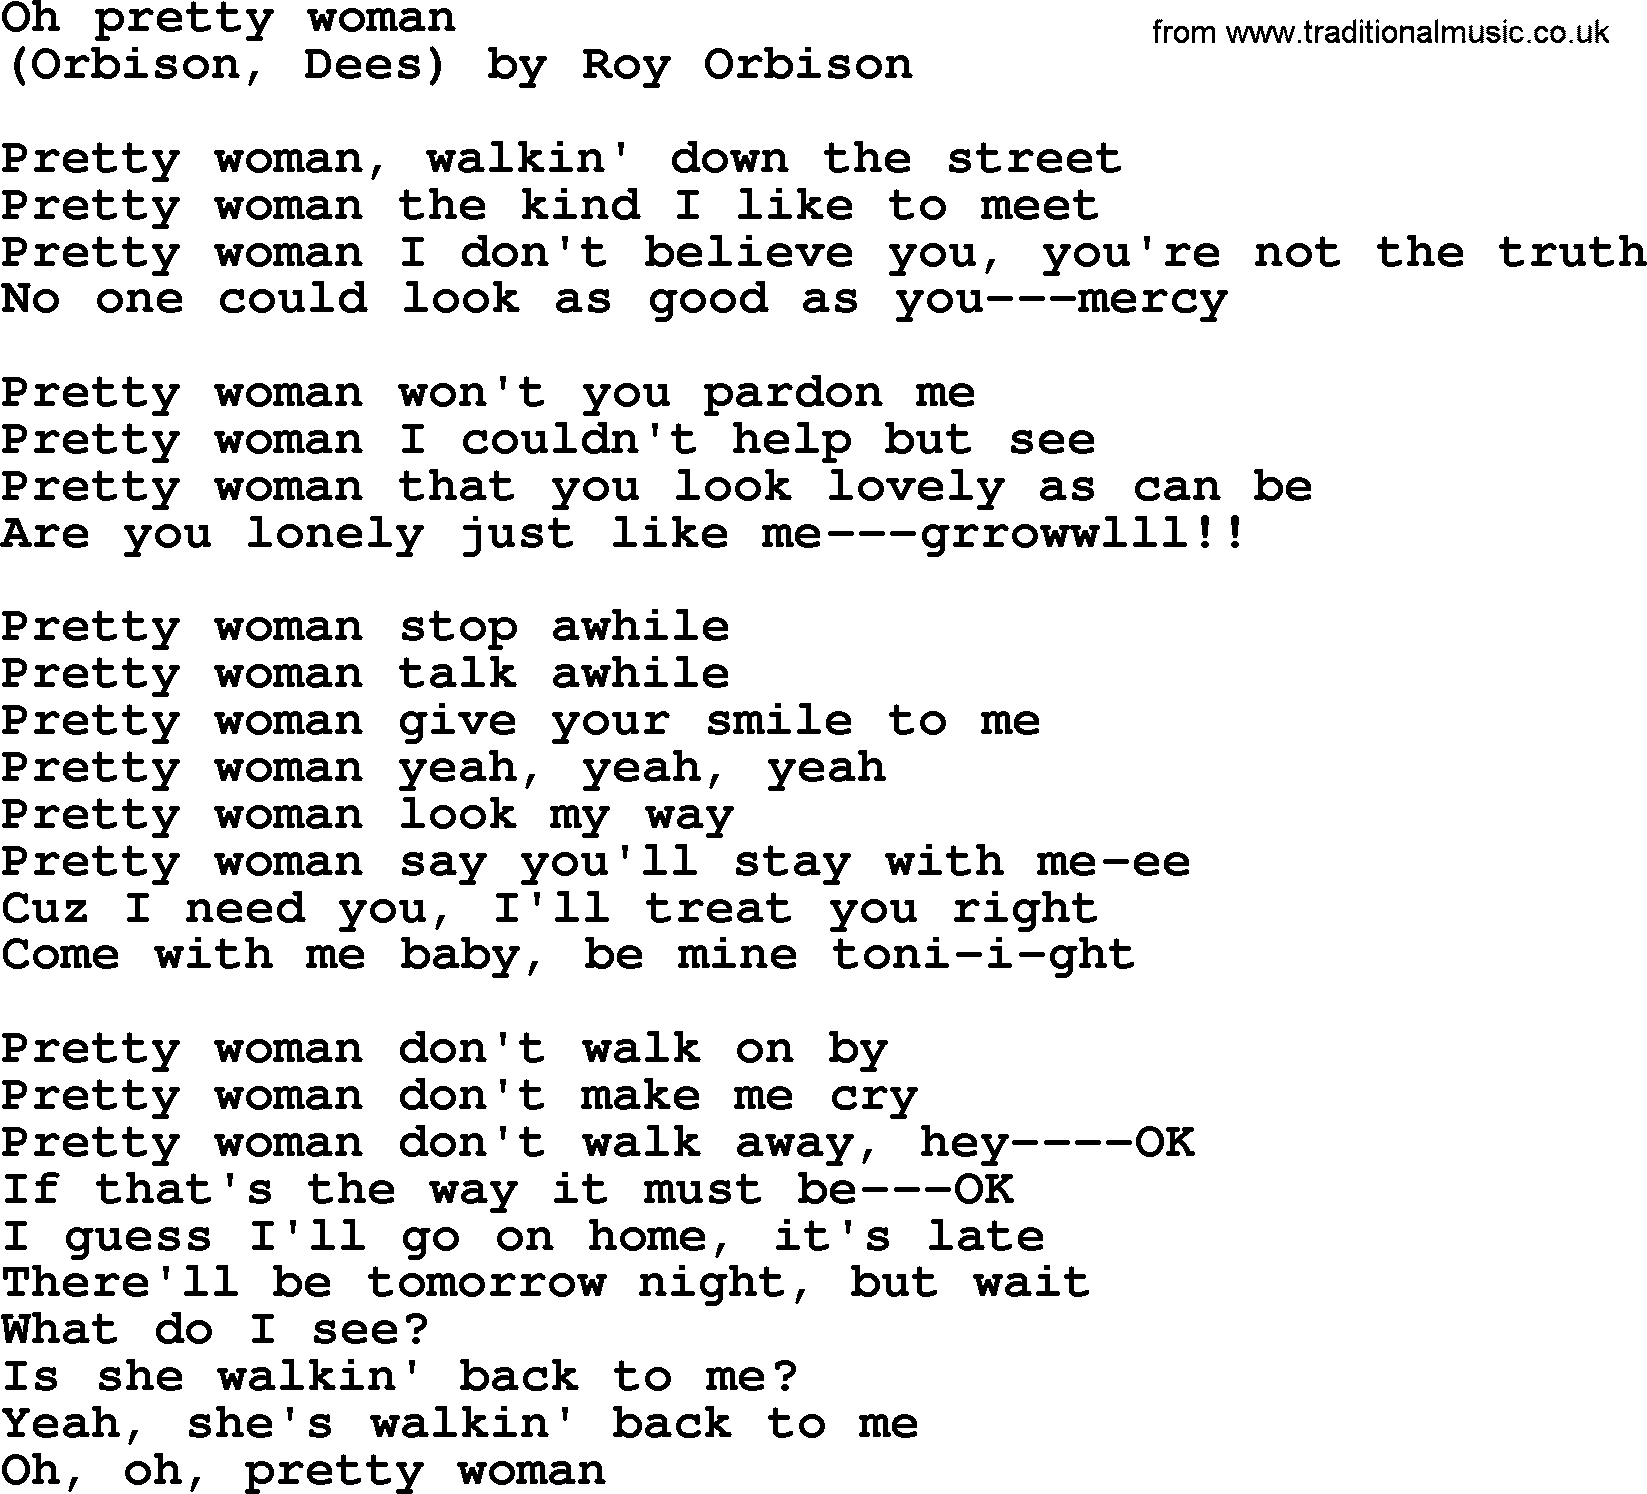 Bruce Springsteen song: Oh Pretty Woman lyrics